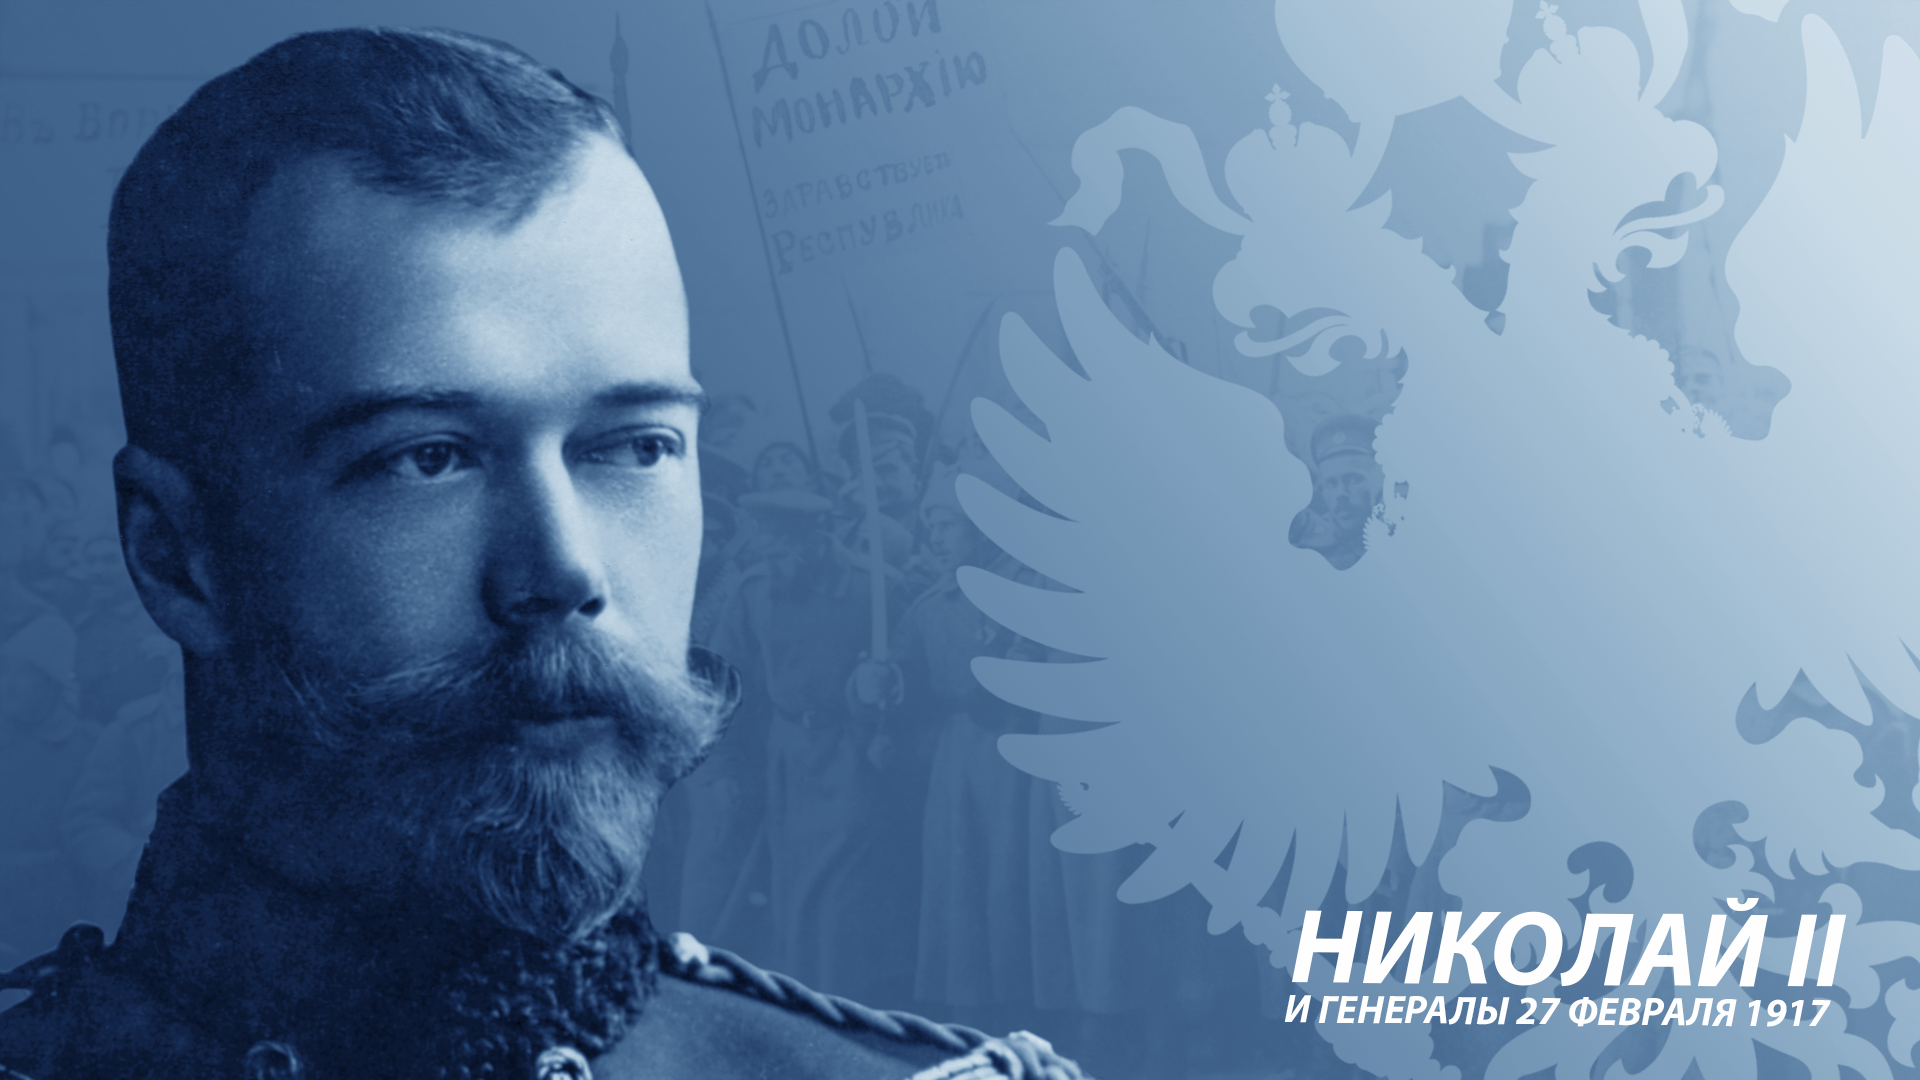 Nicholas II and the generals February 27, 1917. Part 1 - Yakutov, Российская империя, Story, Nicholas II, February revolution, Longpost